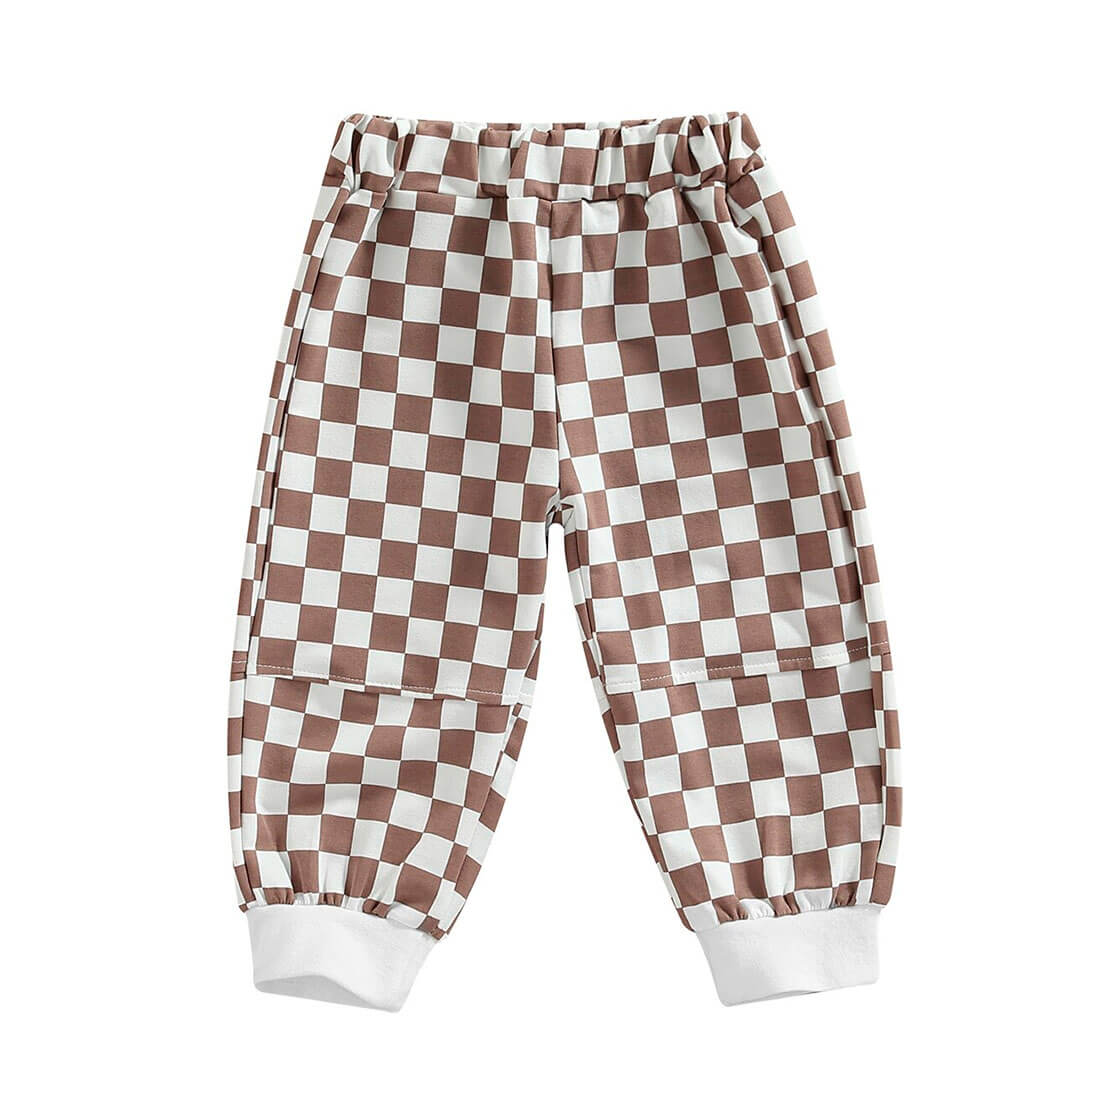 Checkered Toddler Pants Brown 18-24 M 